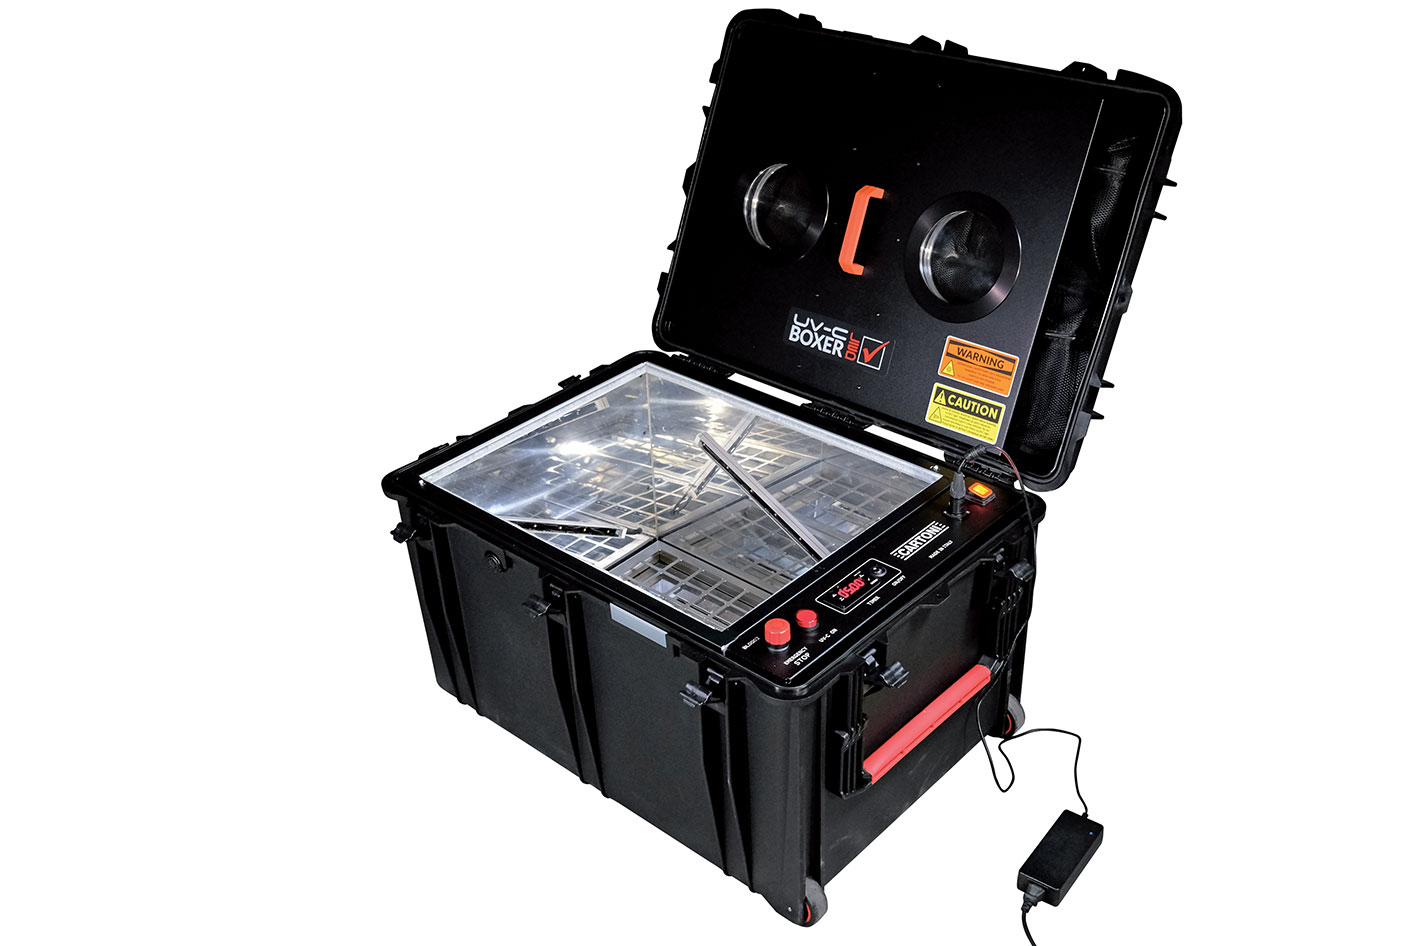 New portable Cartoni UV-C LED Boxer destroys COVID-19 in 5 minutes